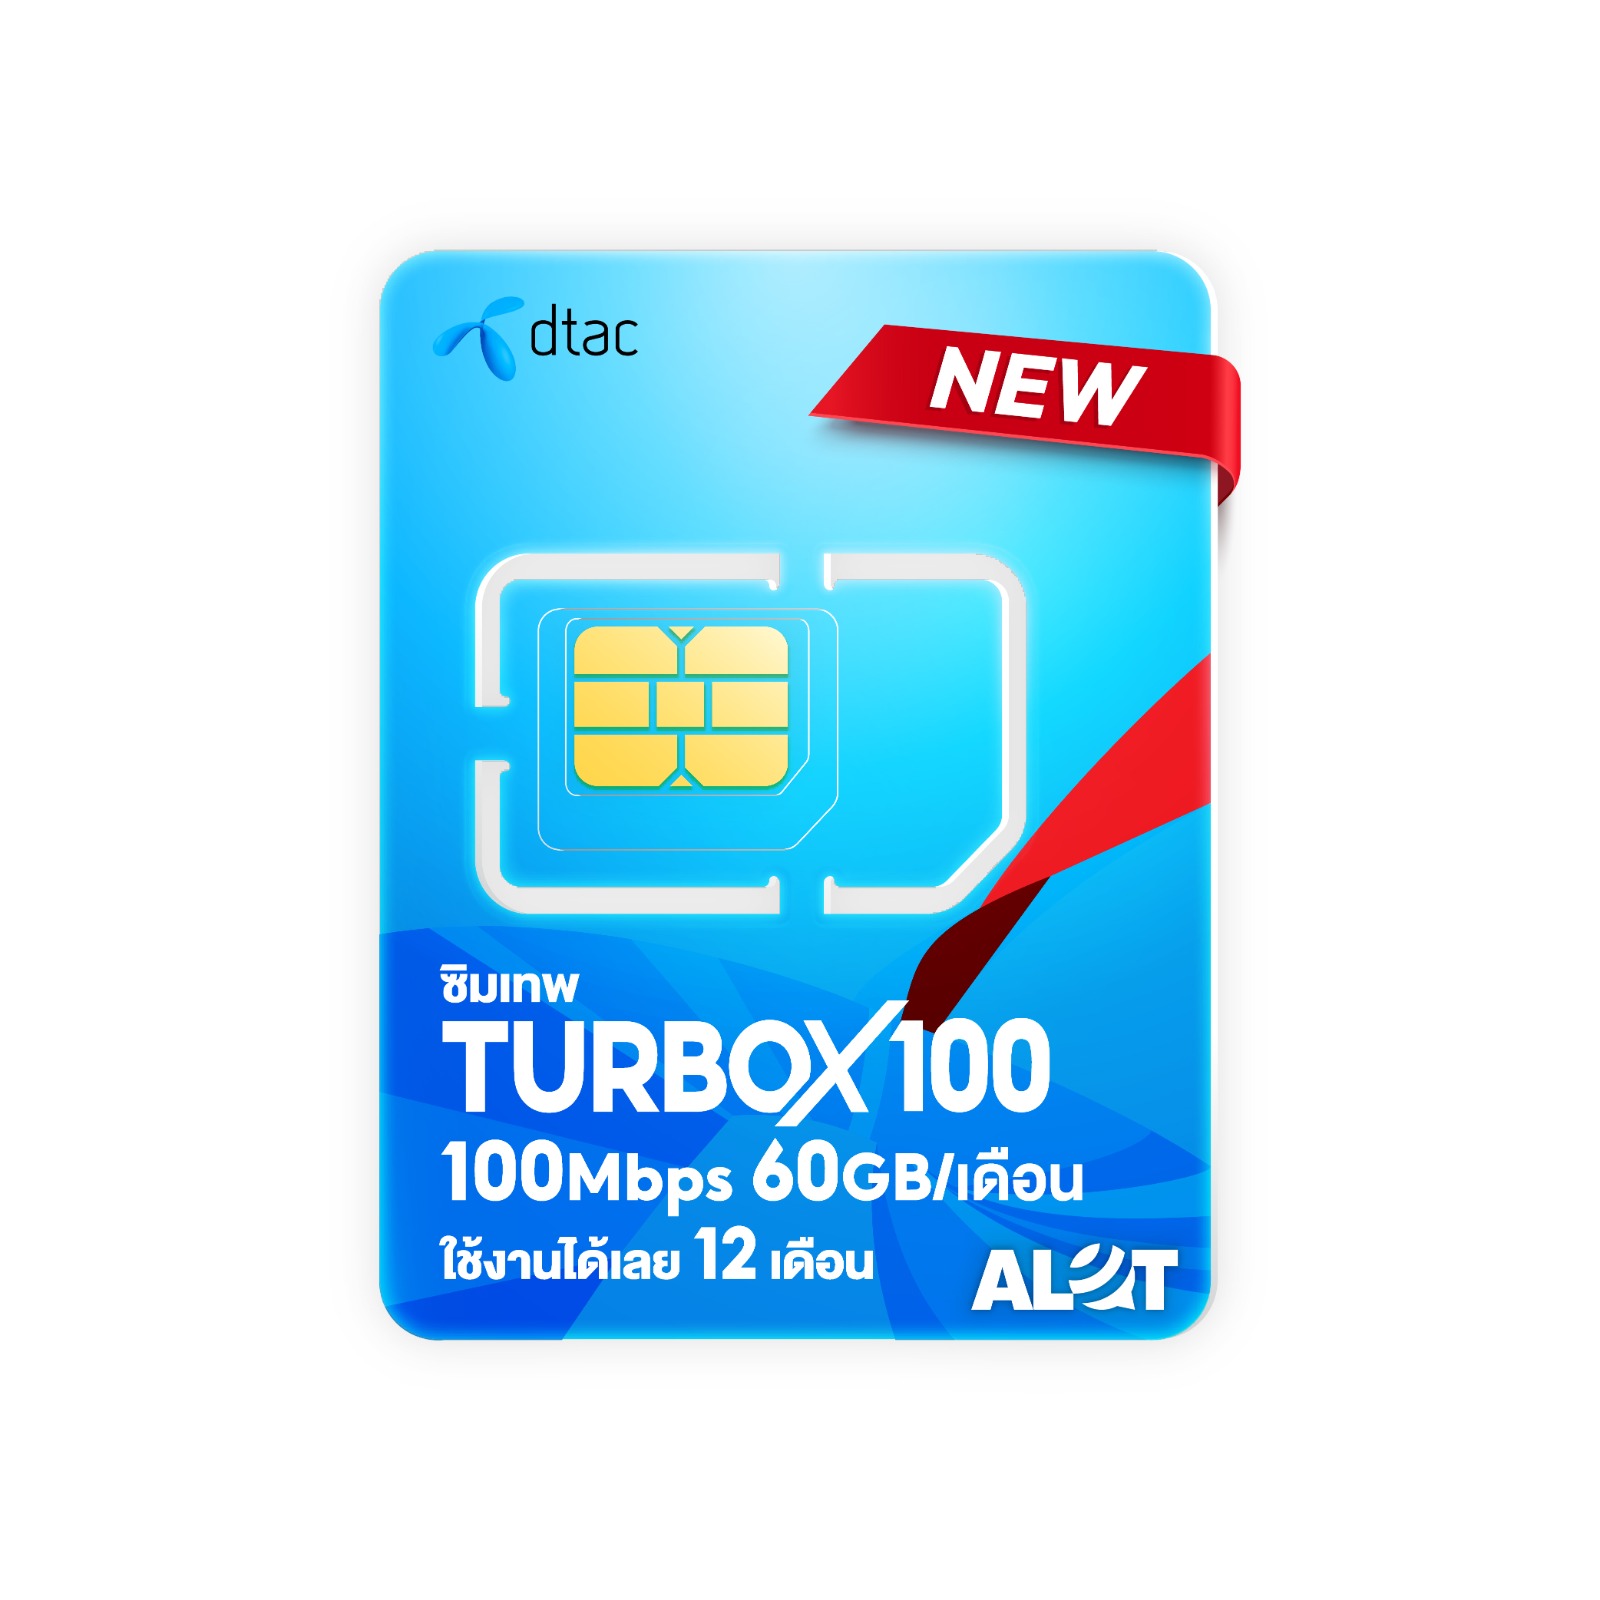 turbo x 100 web